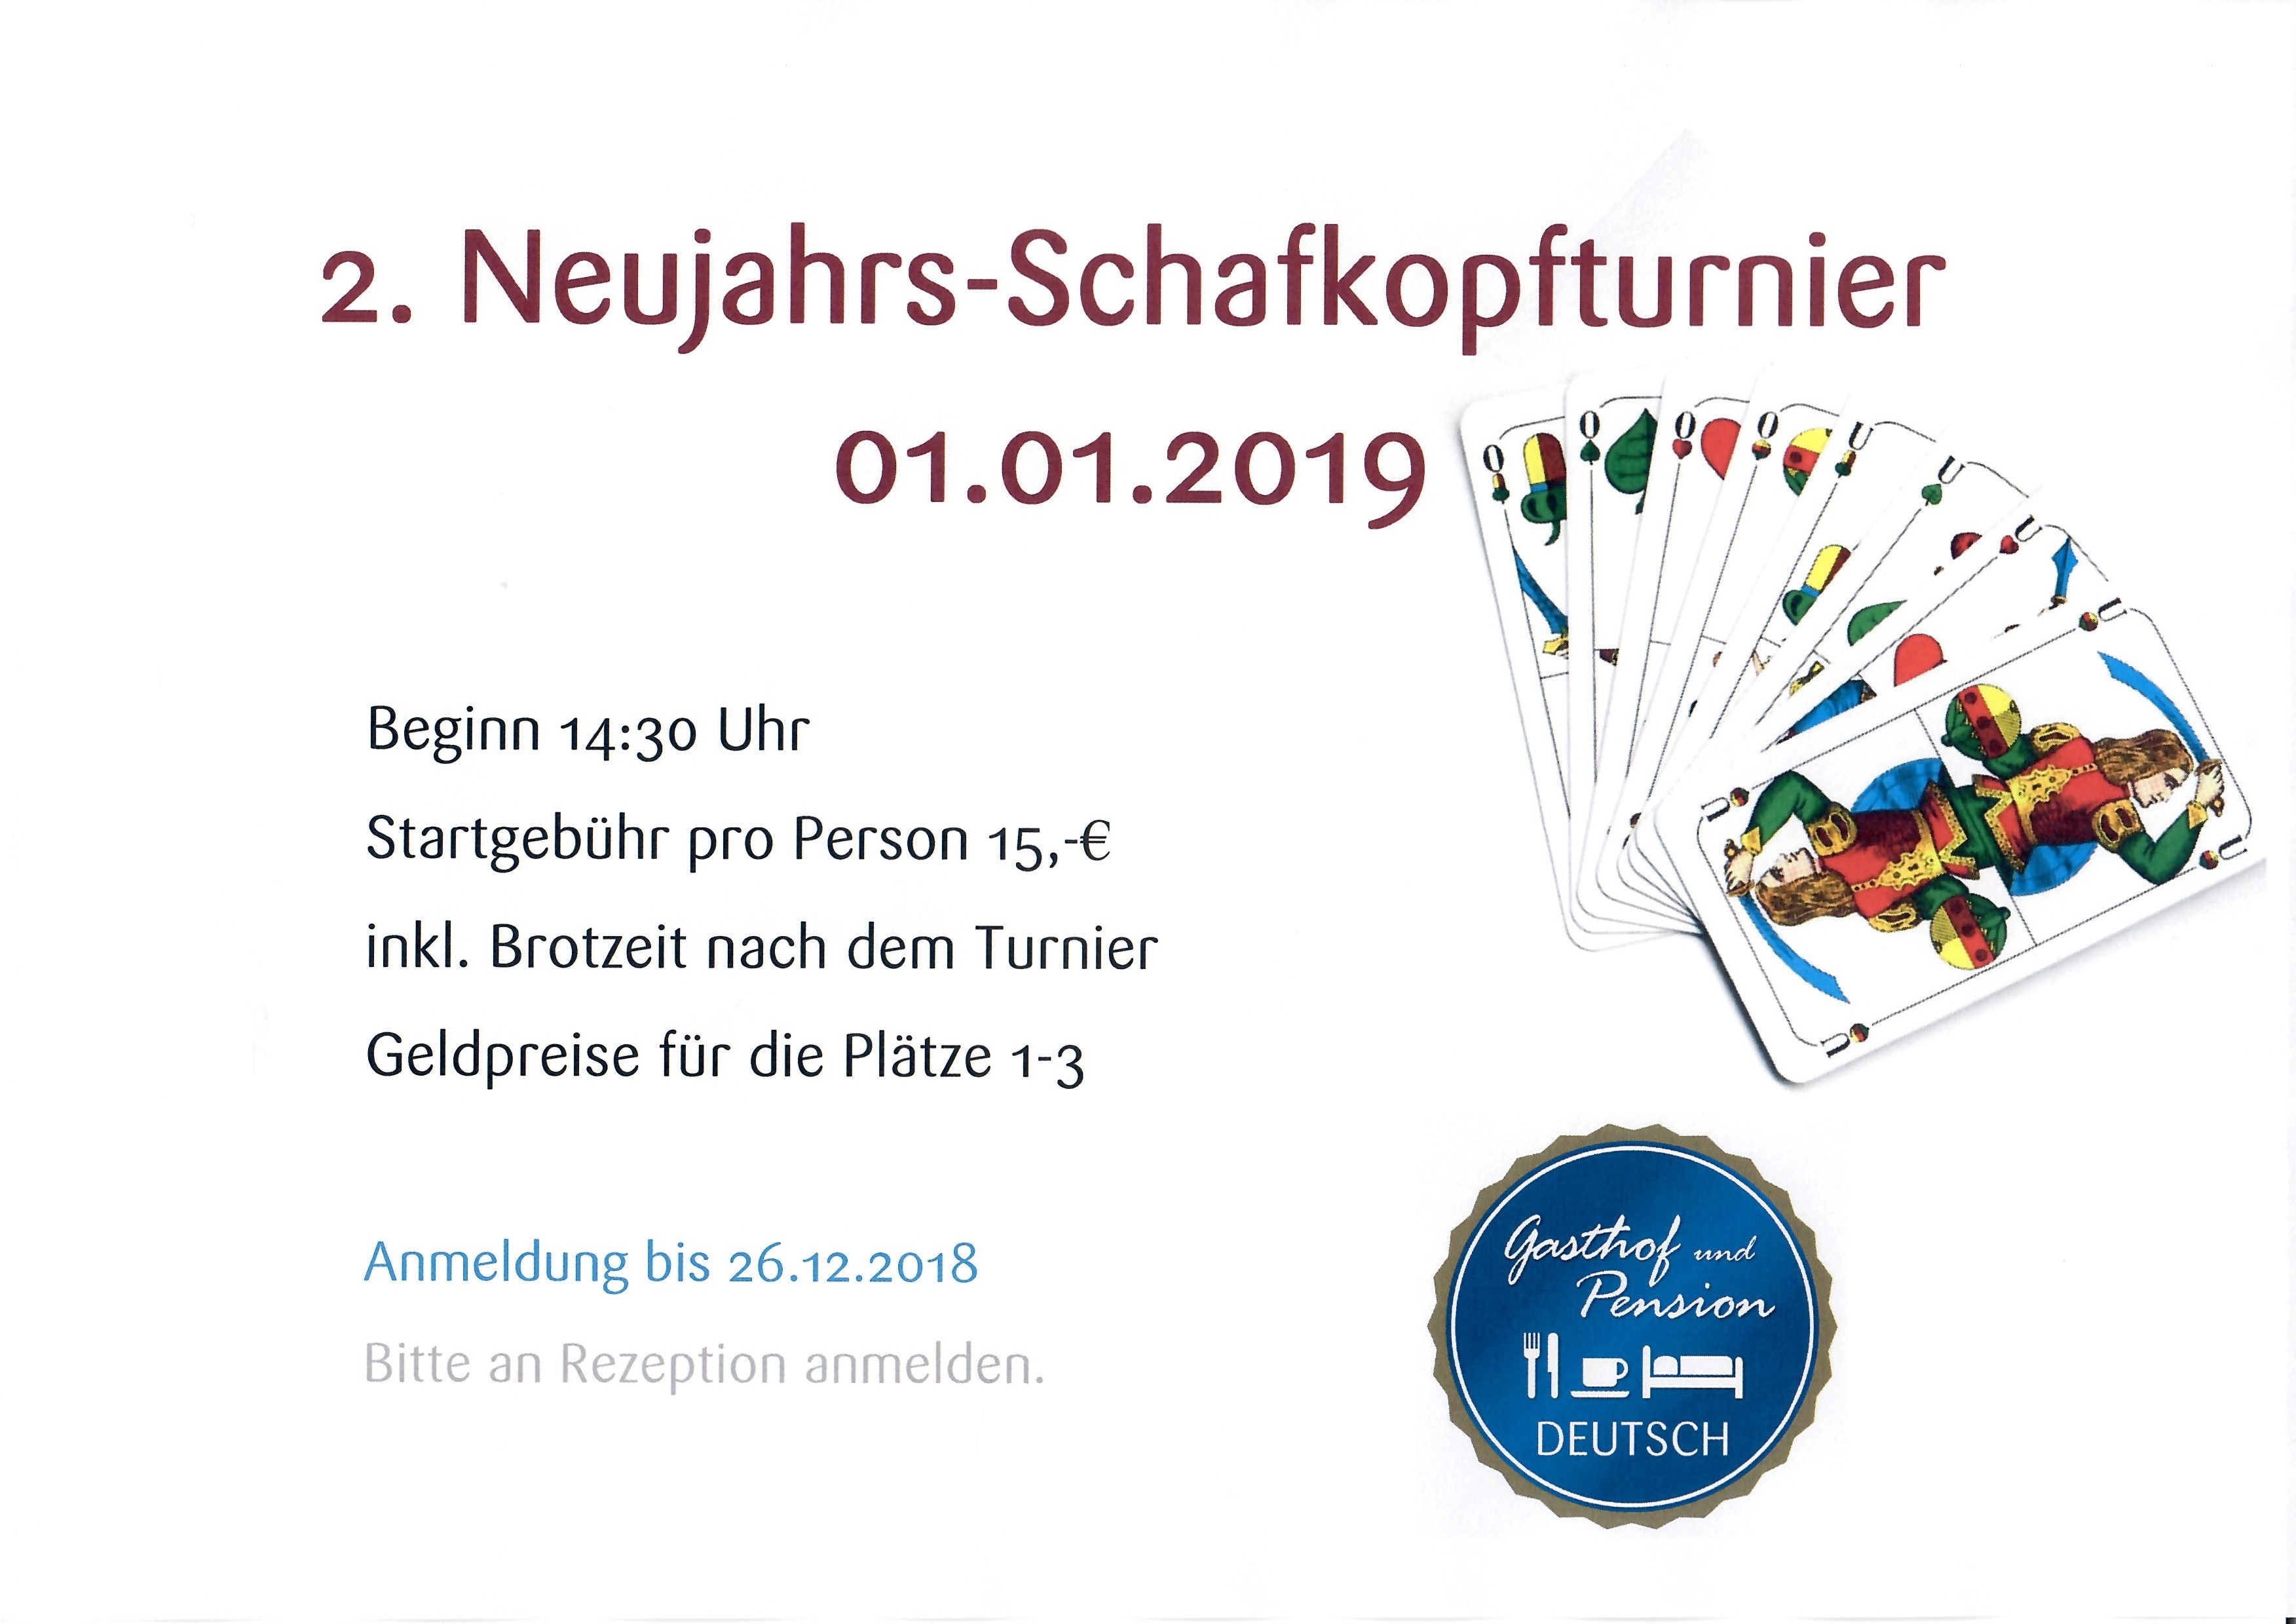 Neujahrs-Schafkopfturnier 2019